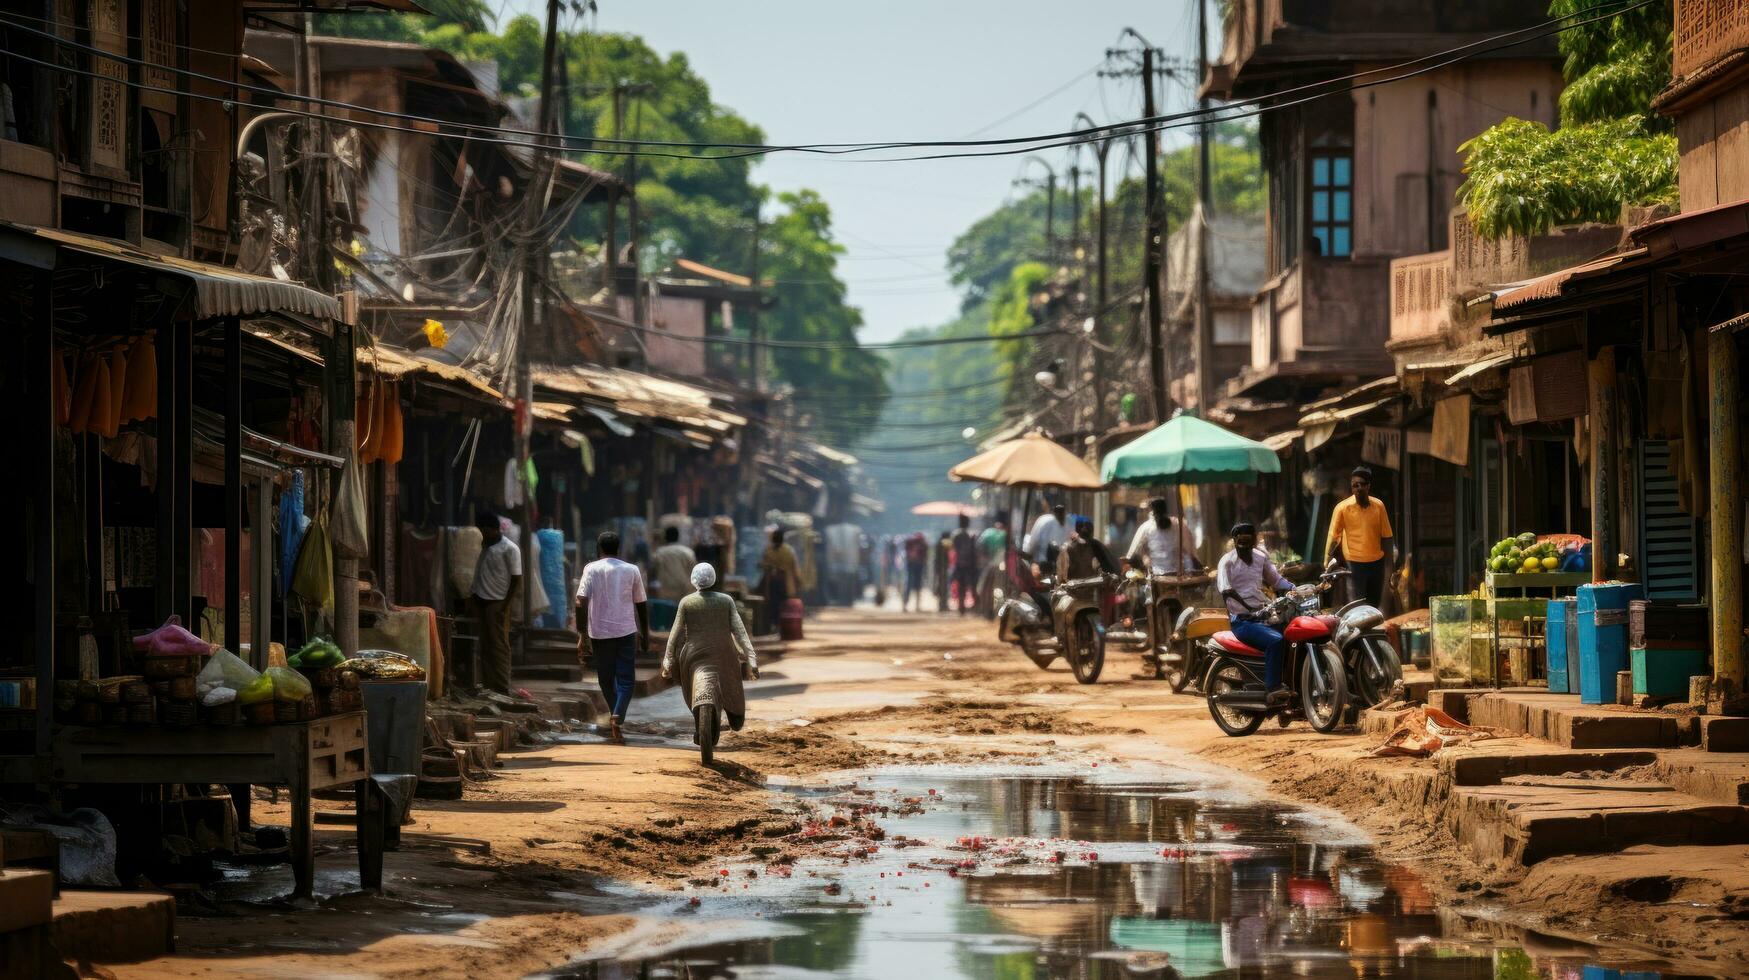 città indiano mercato Bhopal, madhya pradesh, India. foto